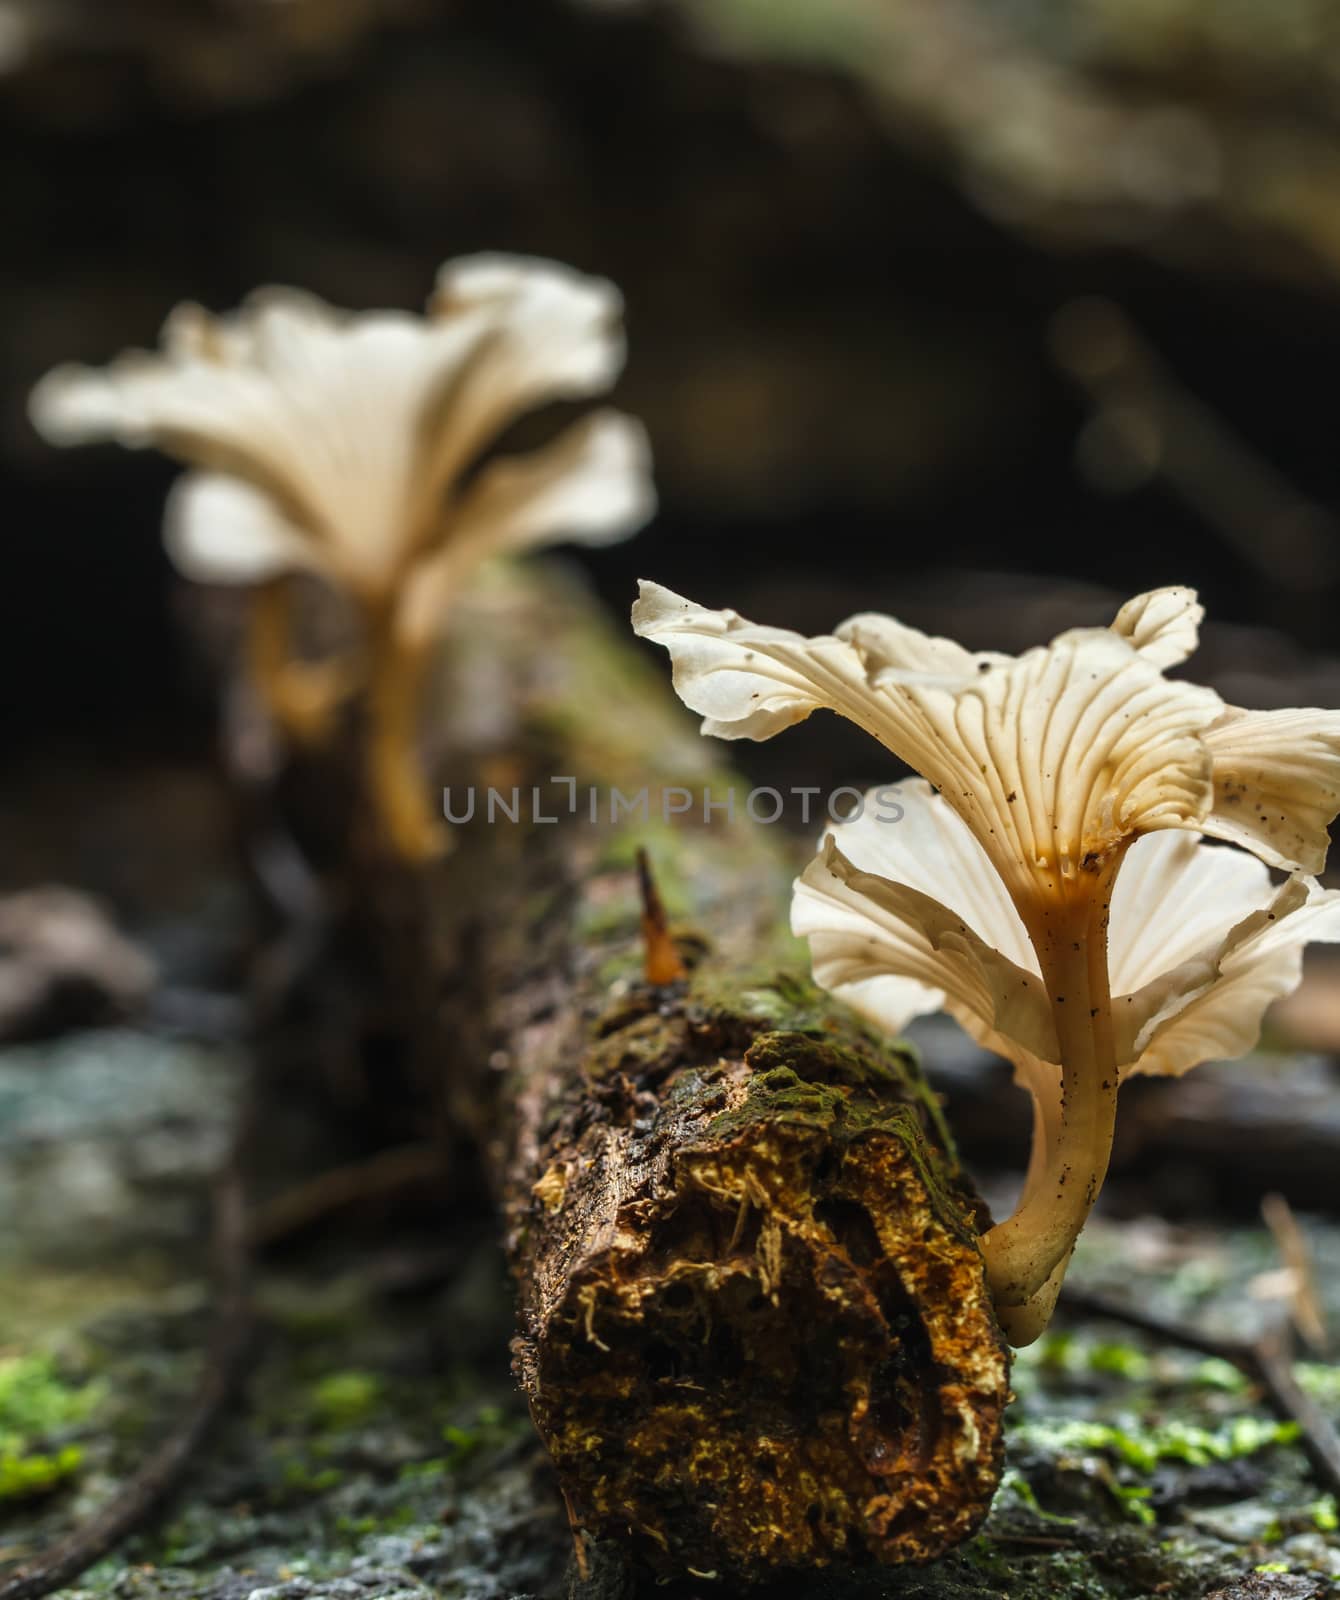 poisonous mushrooms by Praphan